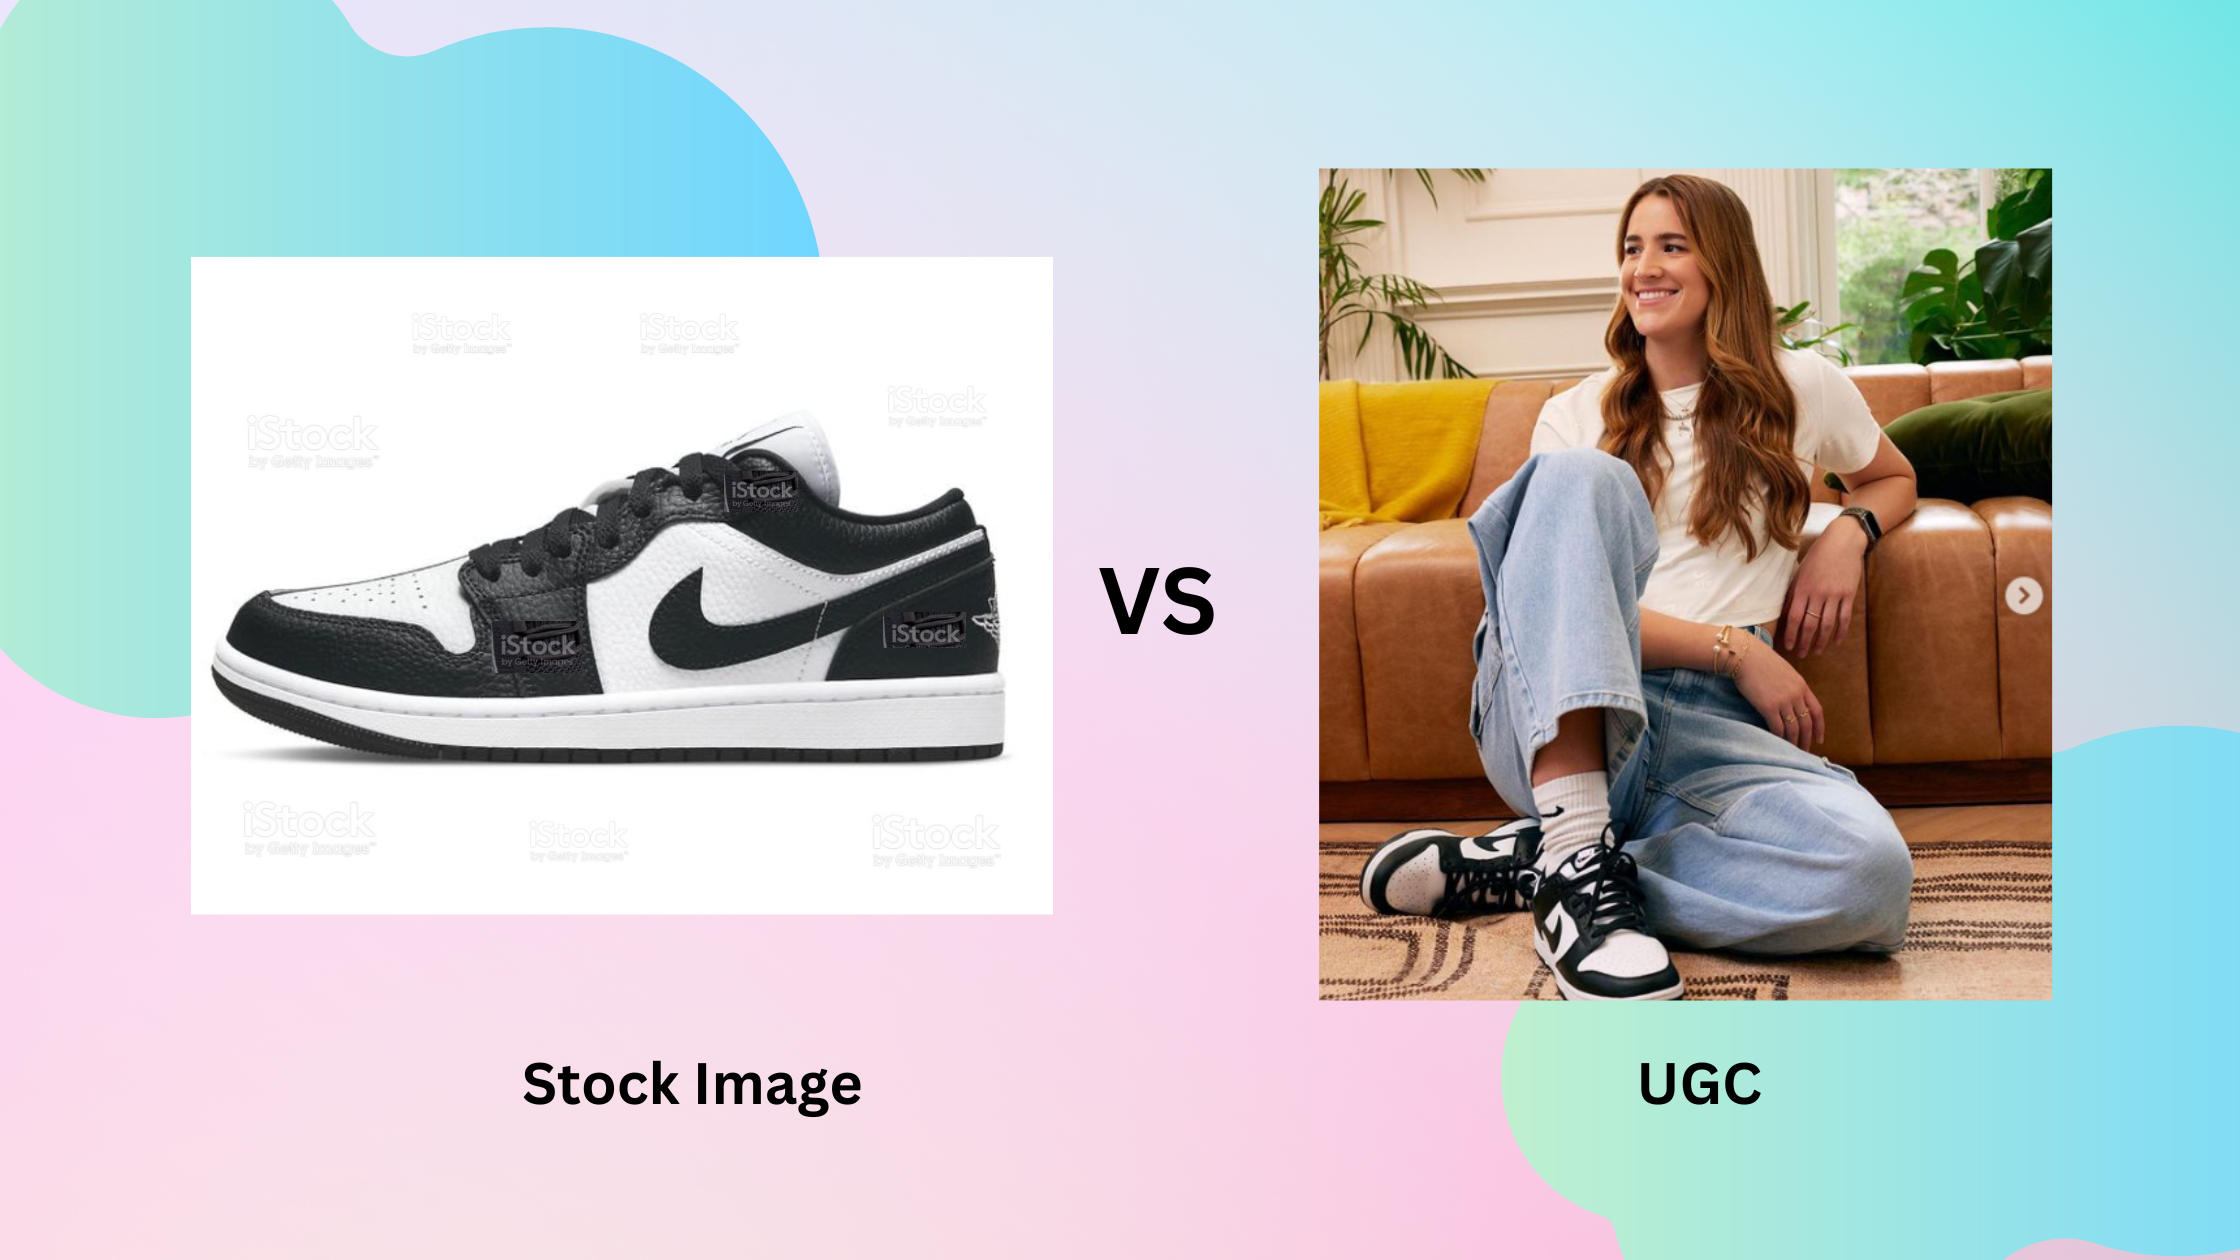 Stock Images VS UGC